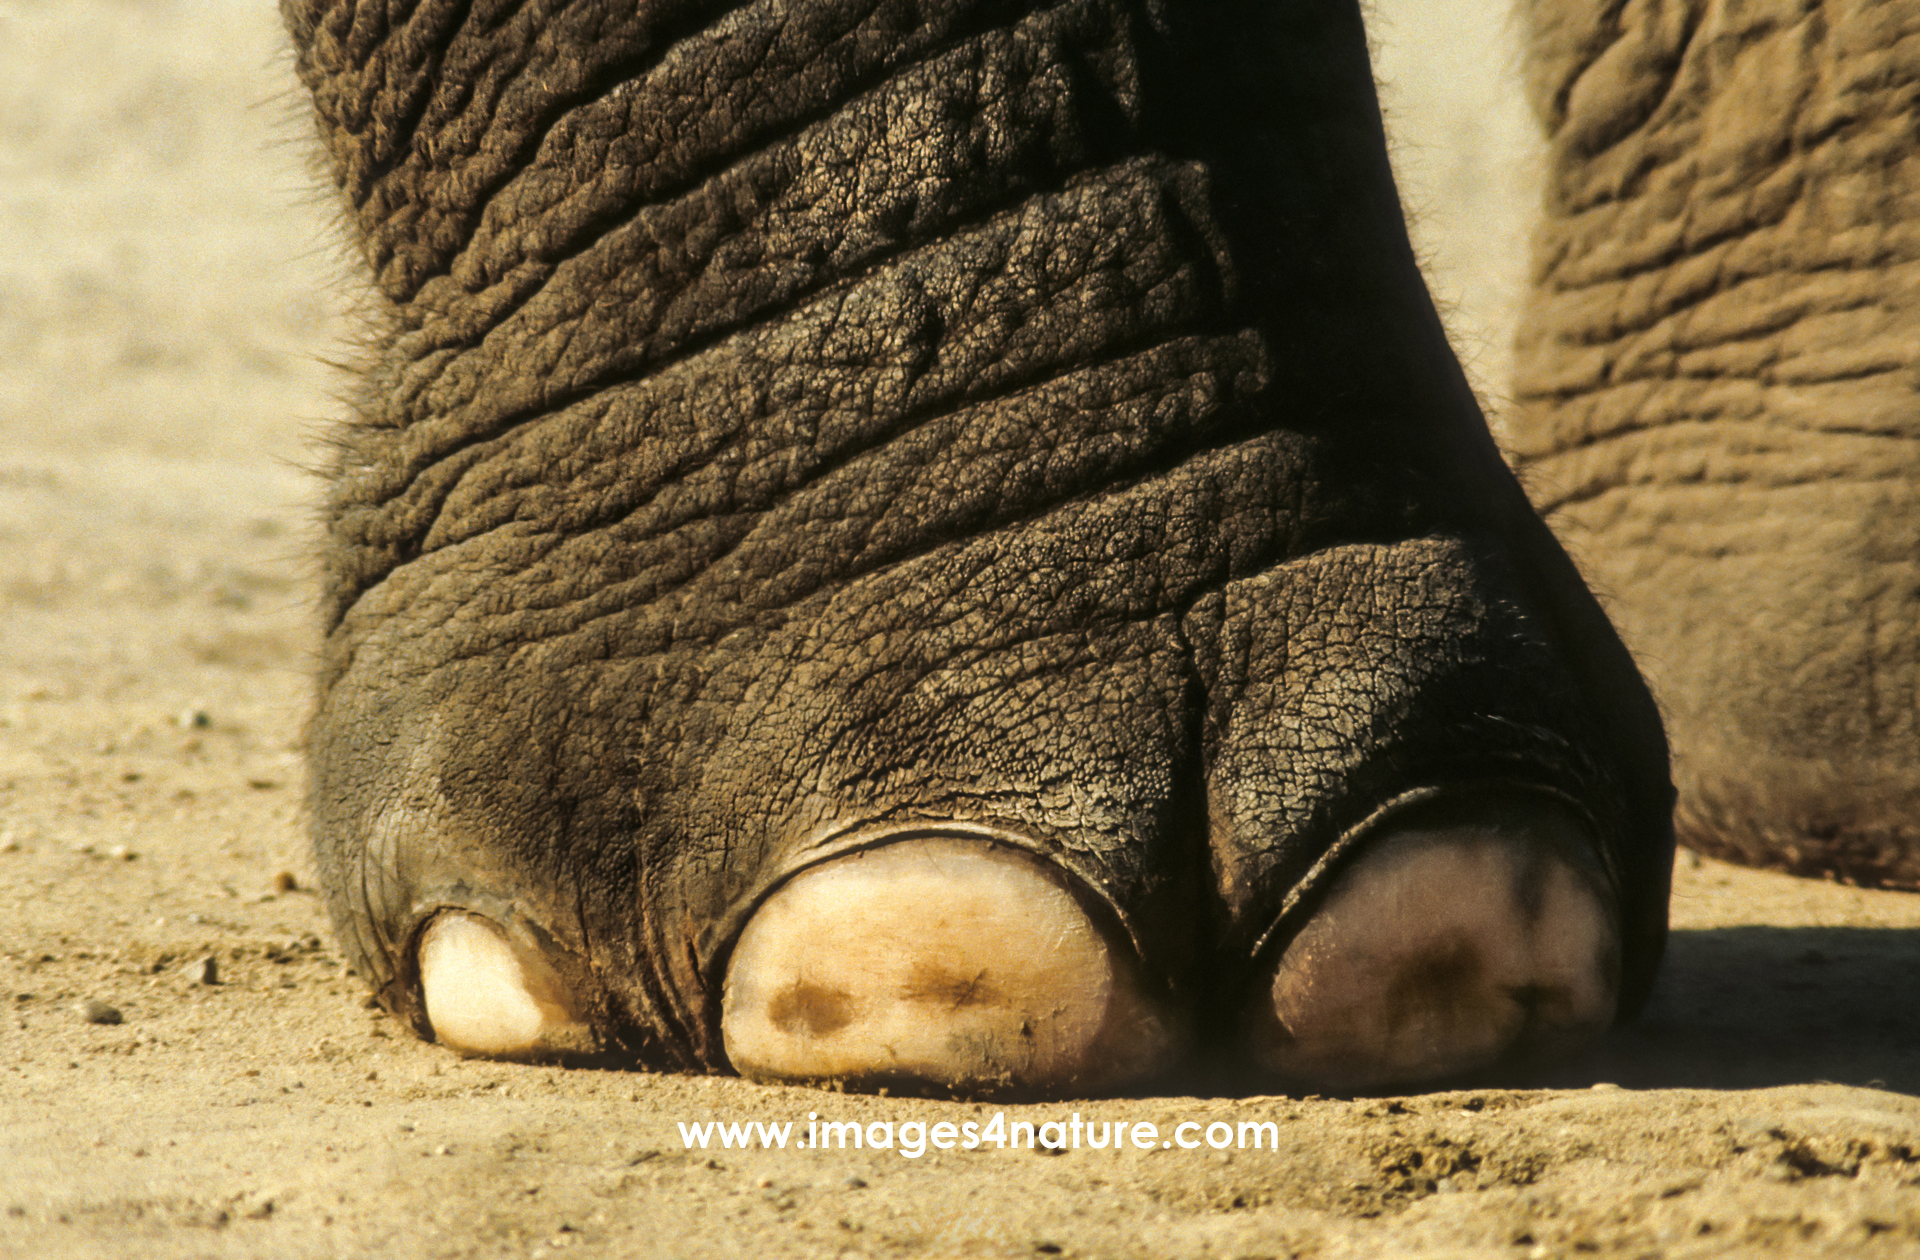 Closeup on elephant foot on sandy soil